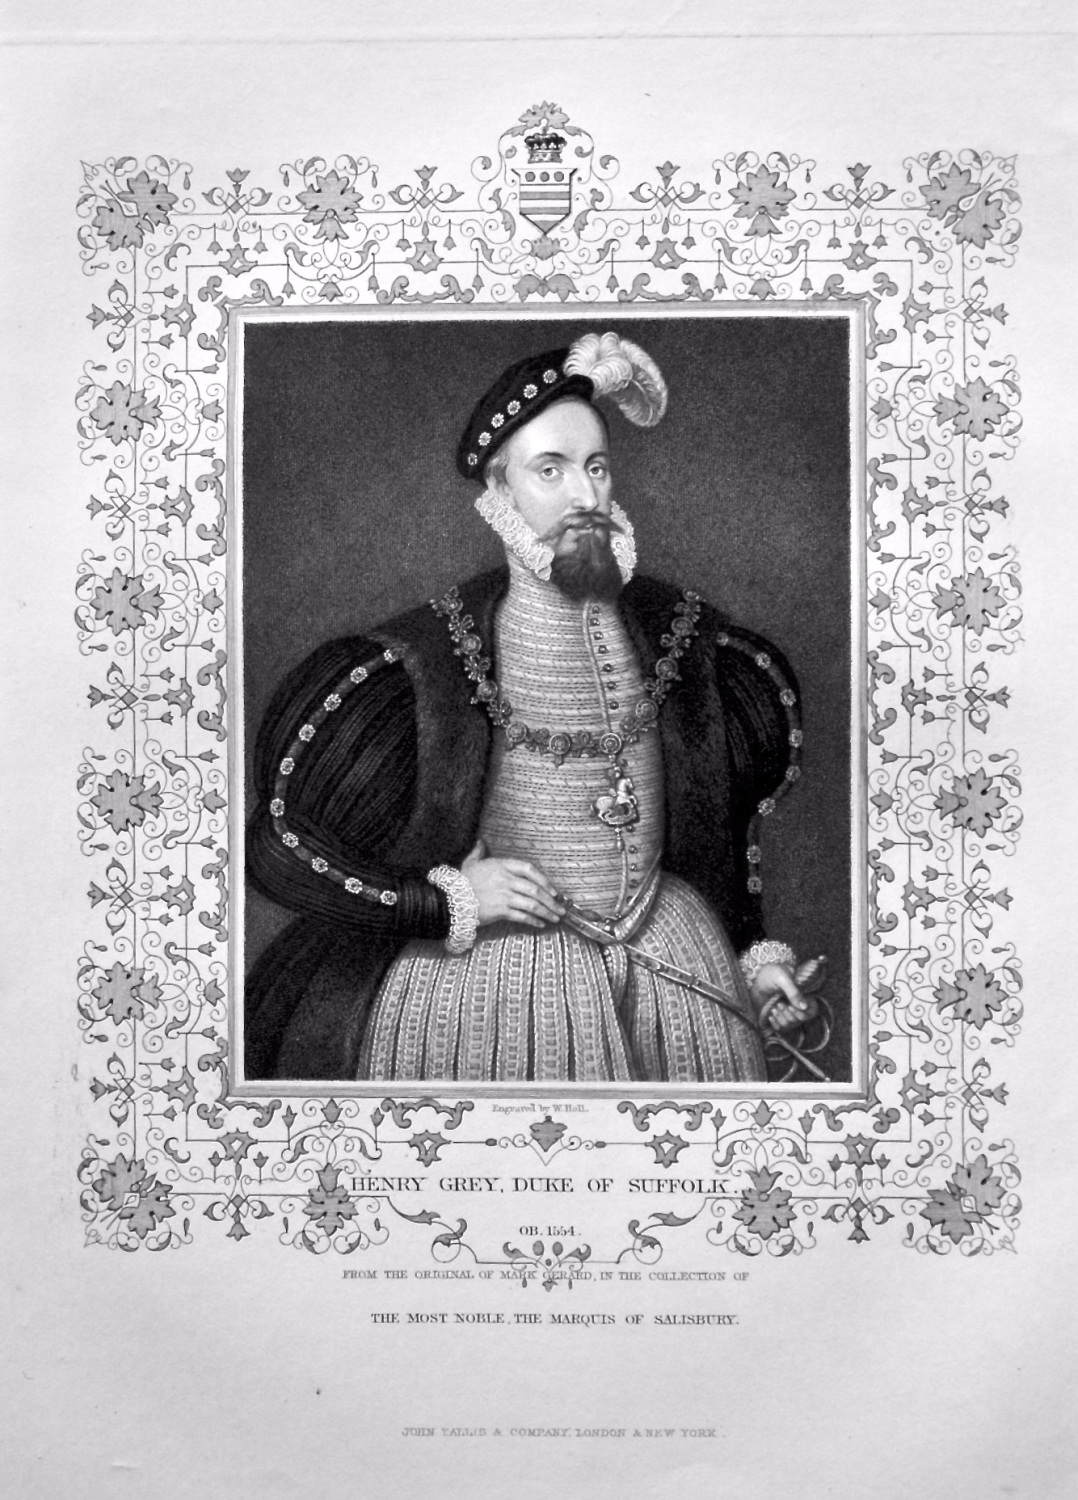 Henry Grey, Duke of Suffolk. OB. 1554.  From the original of Mark Gerard, i